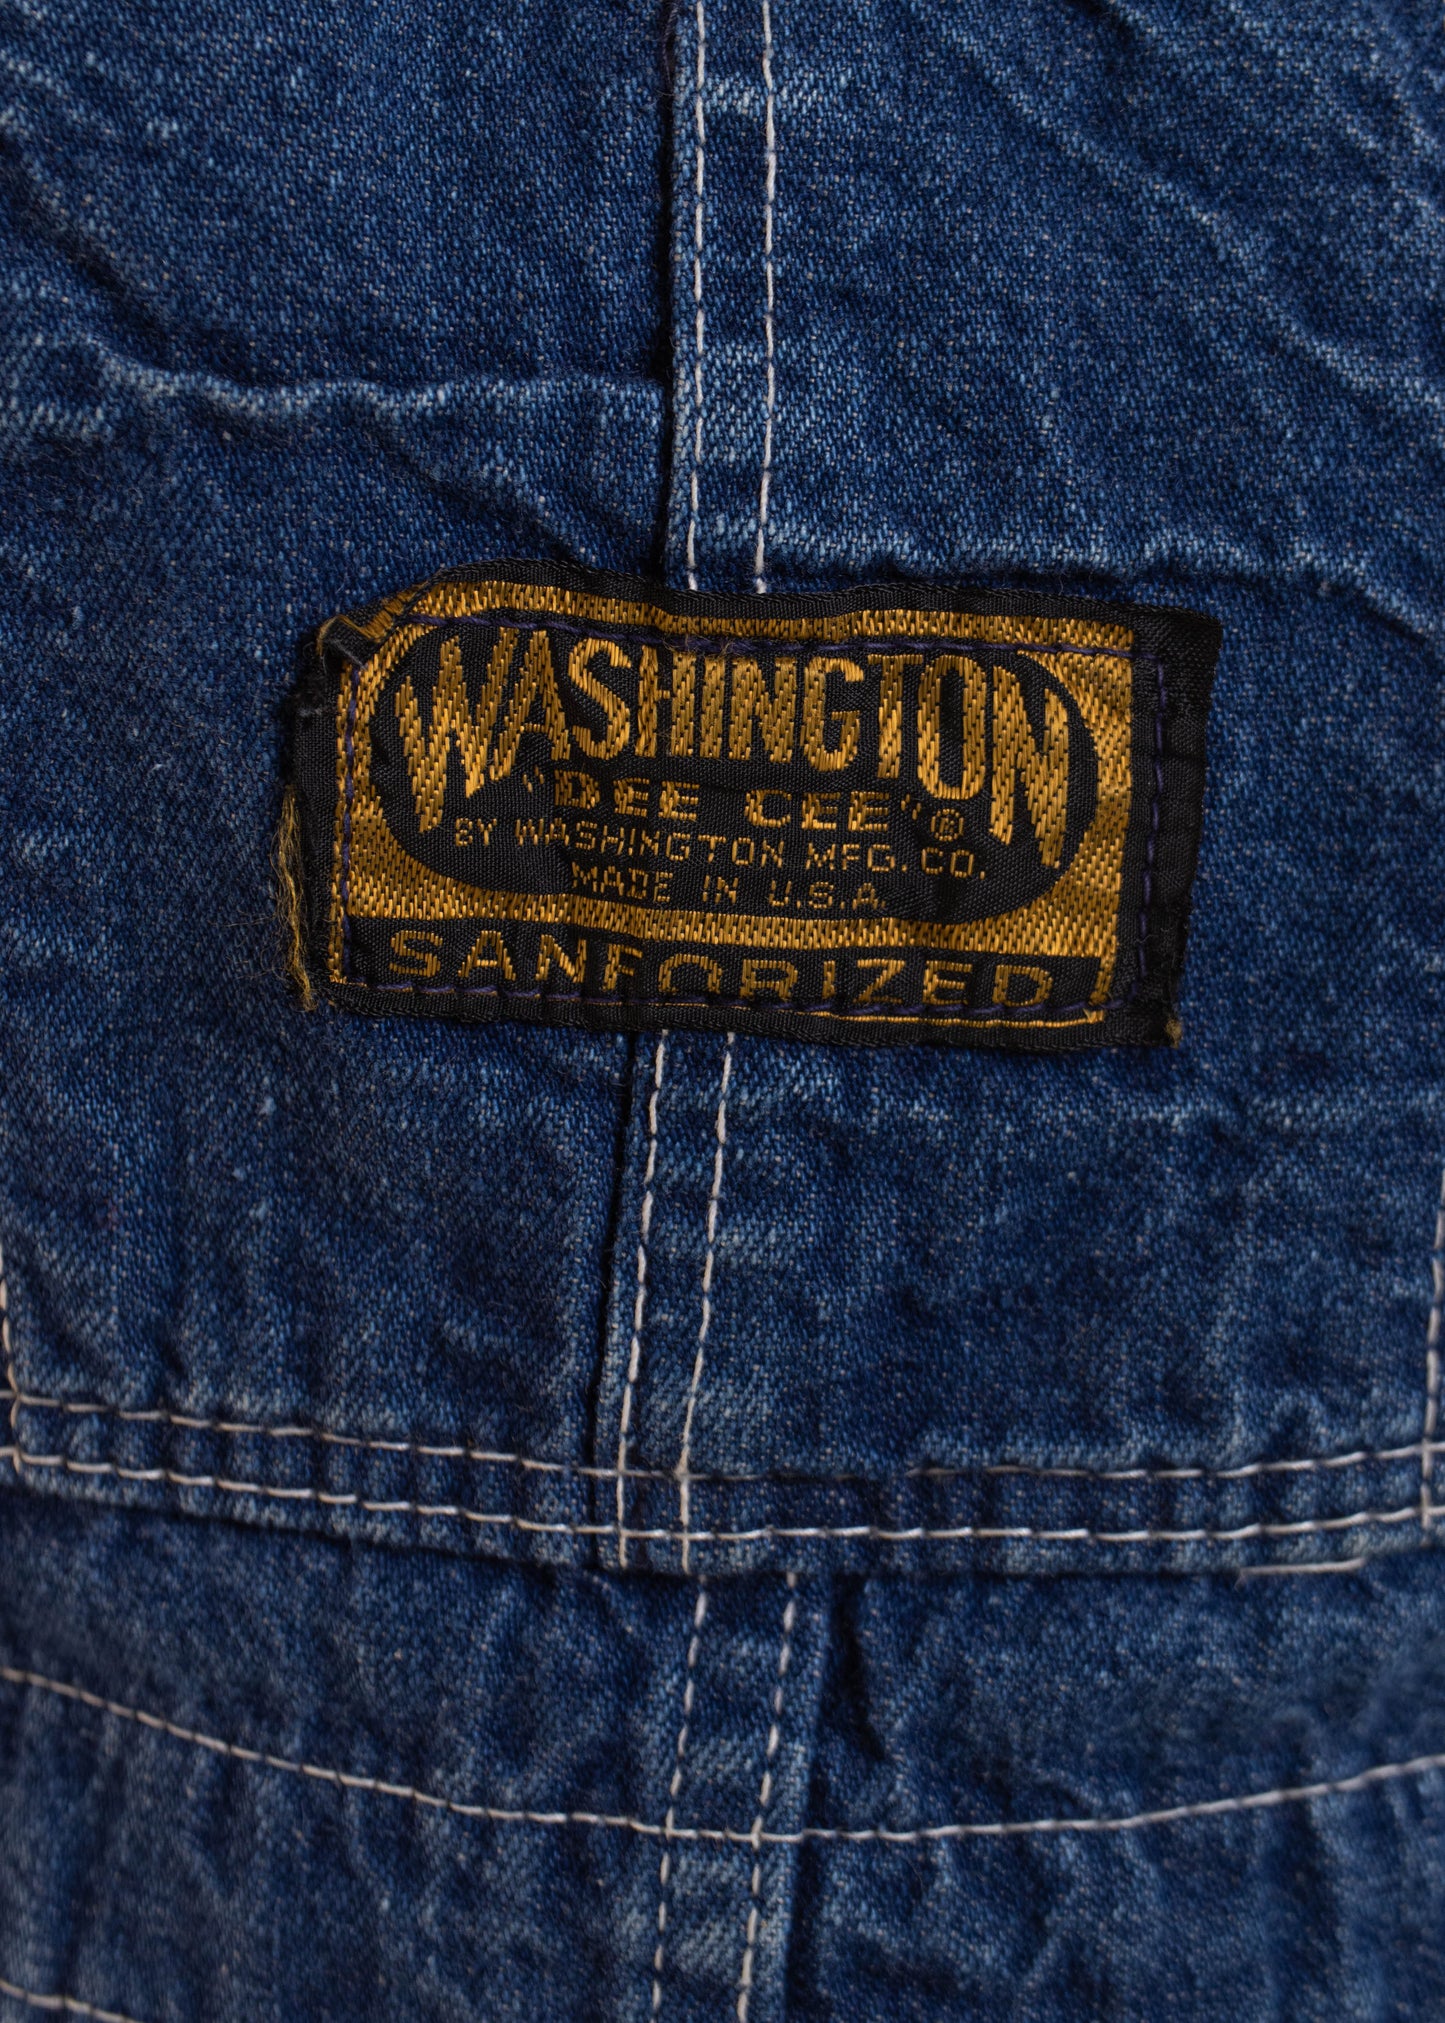 Vintage 1960s Washington "DeeCee" Sanforized Denim Overalls Size XS/S